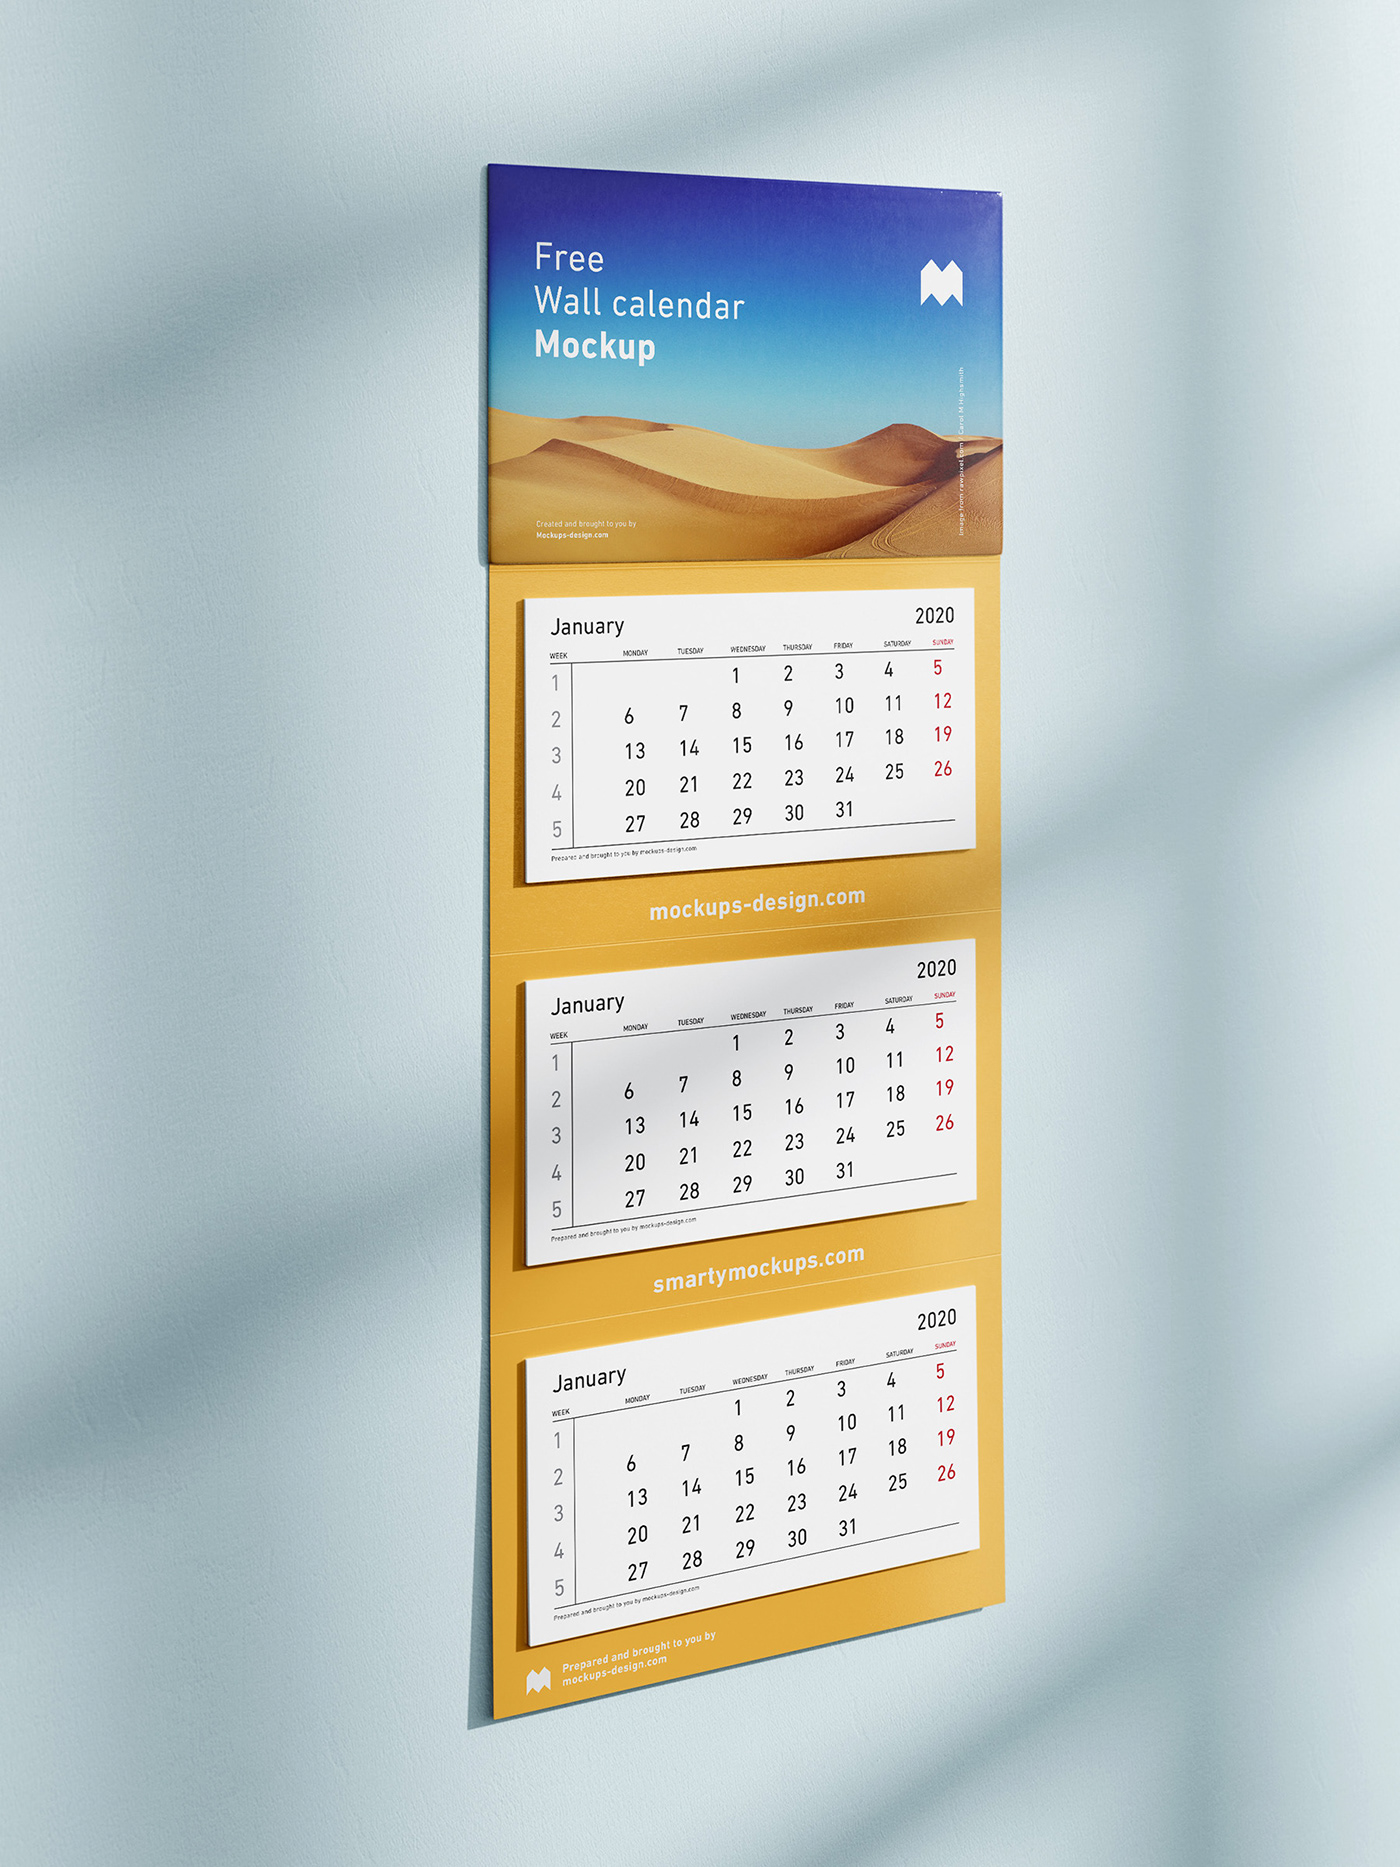 Mockup free wall calendar psd download panel